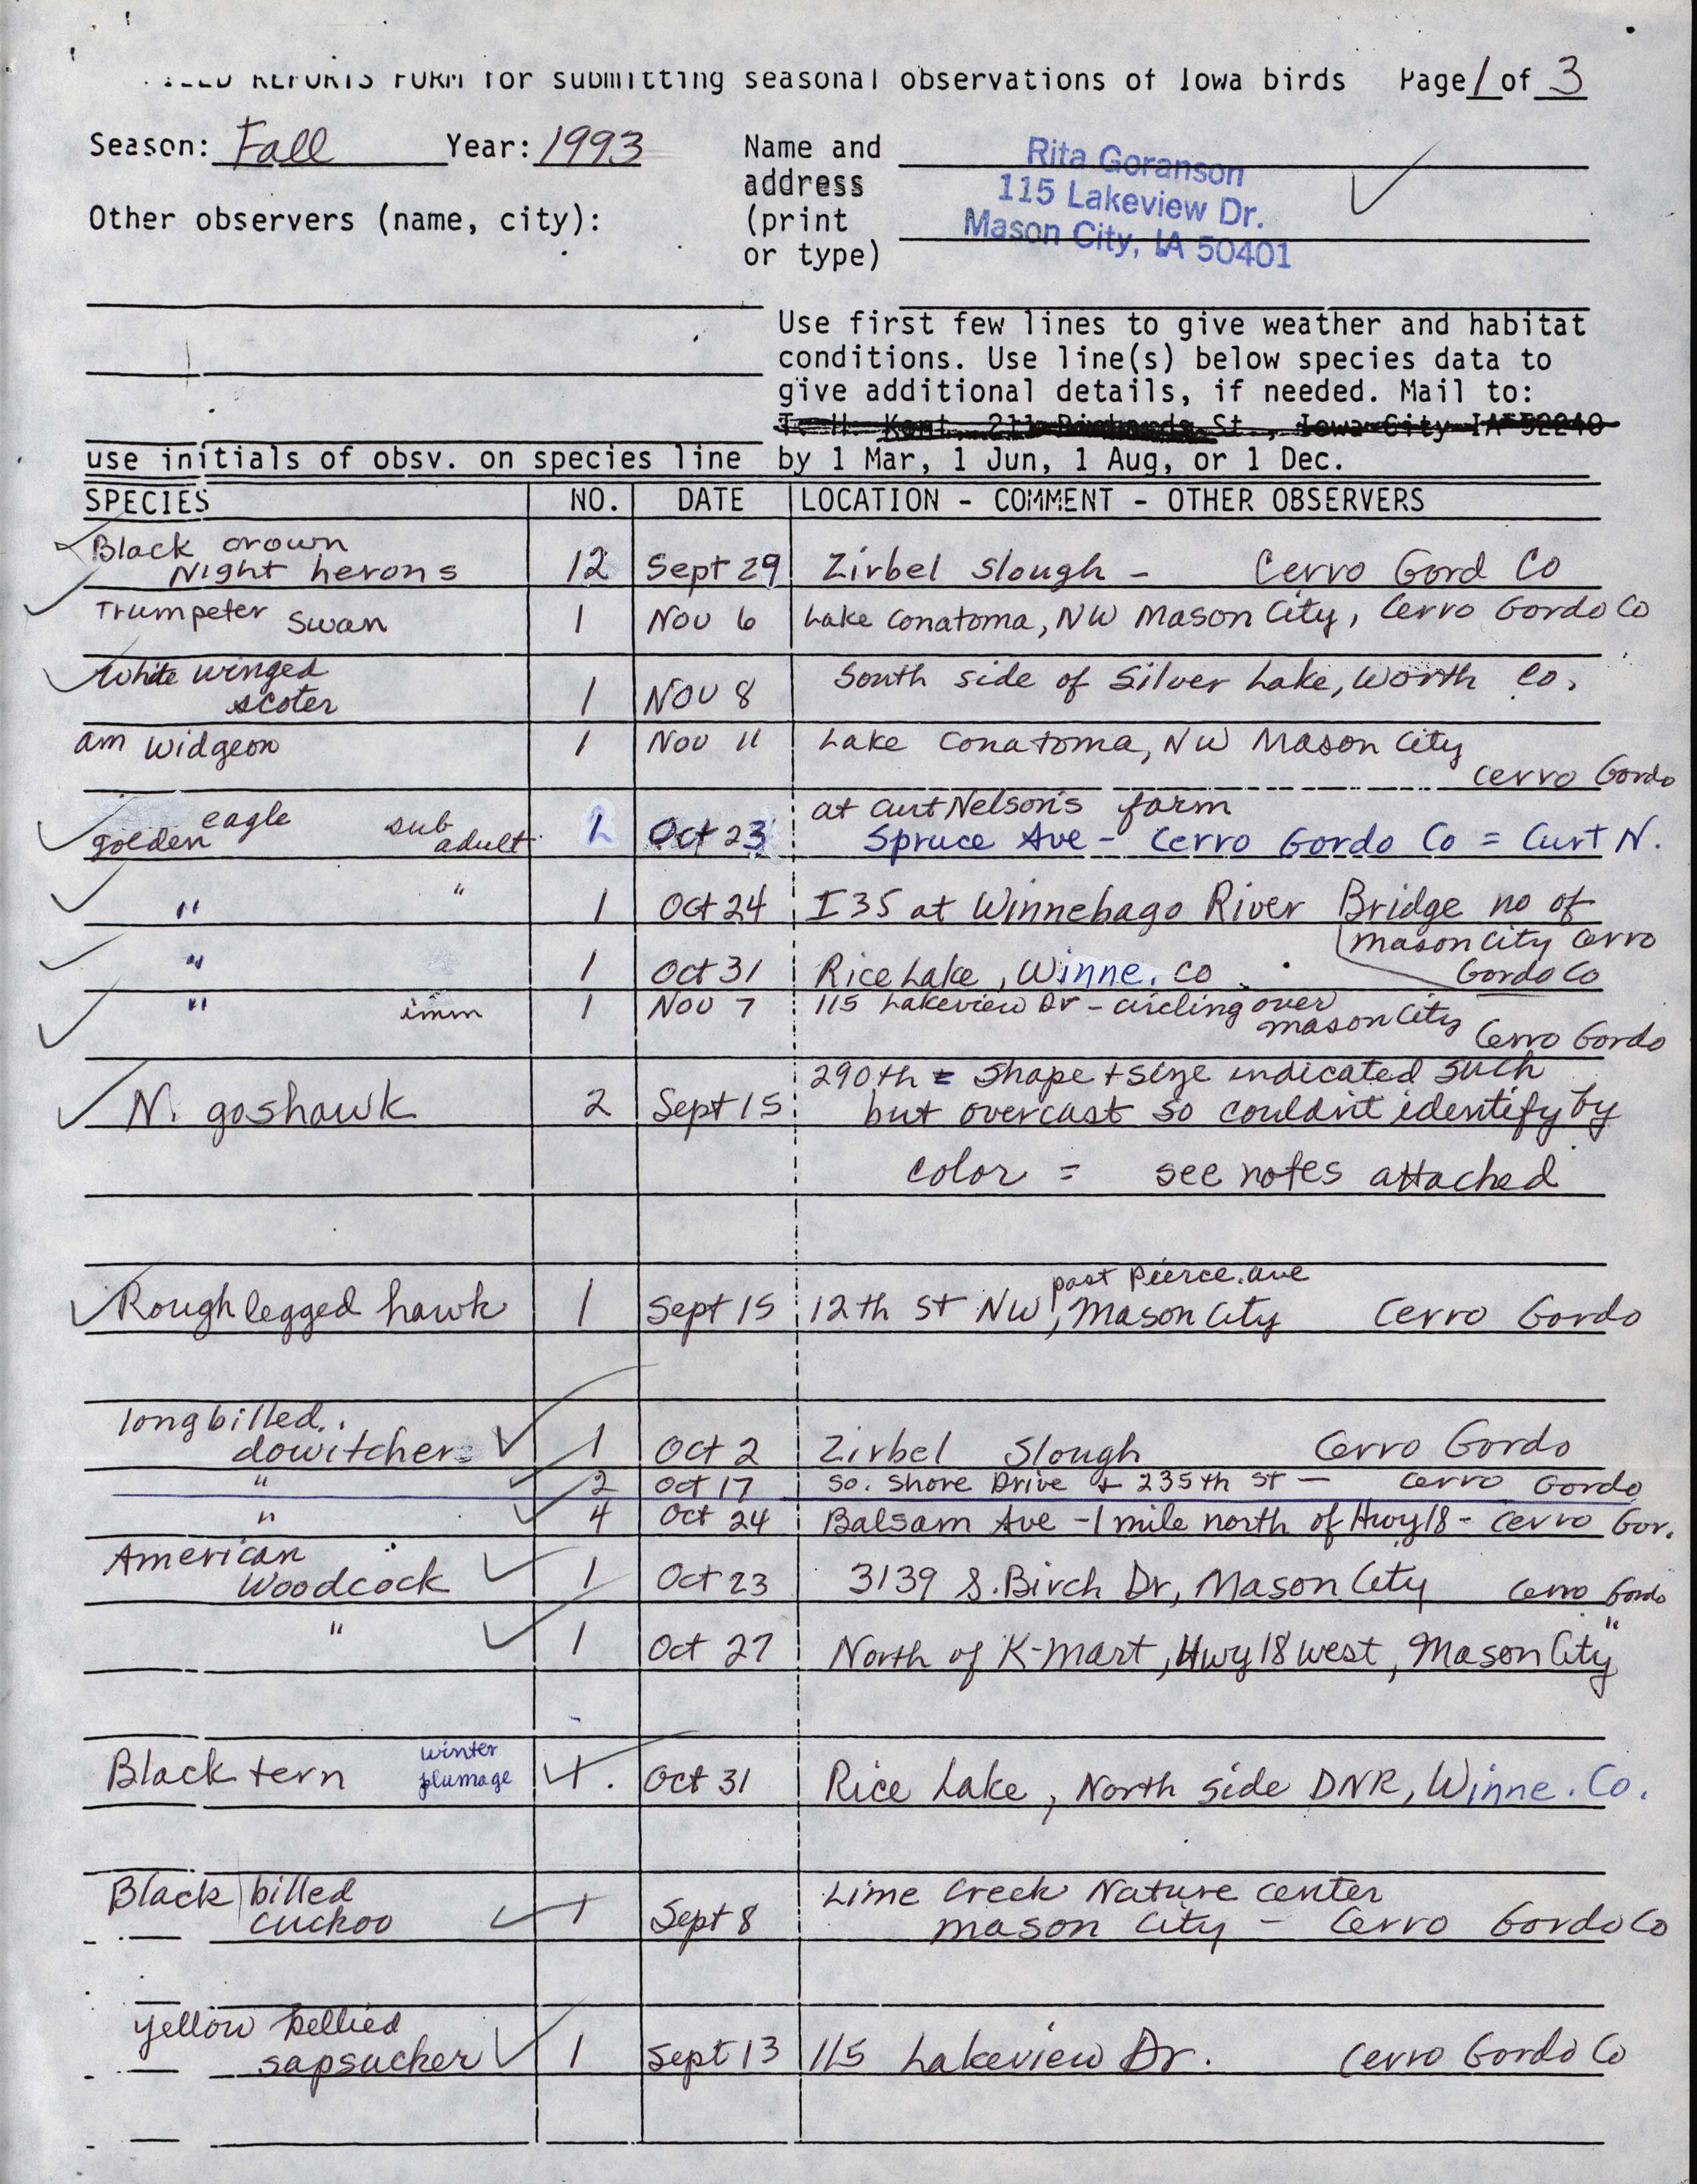 Field reports form for submitting seasonal observations of Iowa birds, Rita Goranson, fall 1993